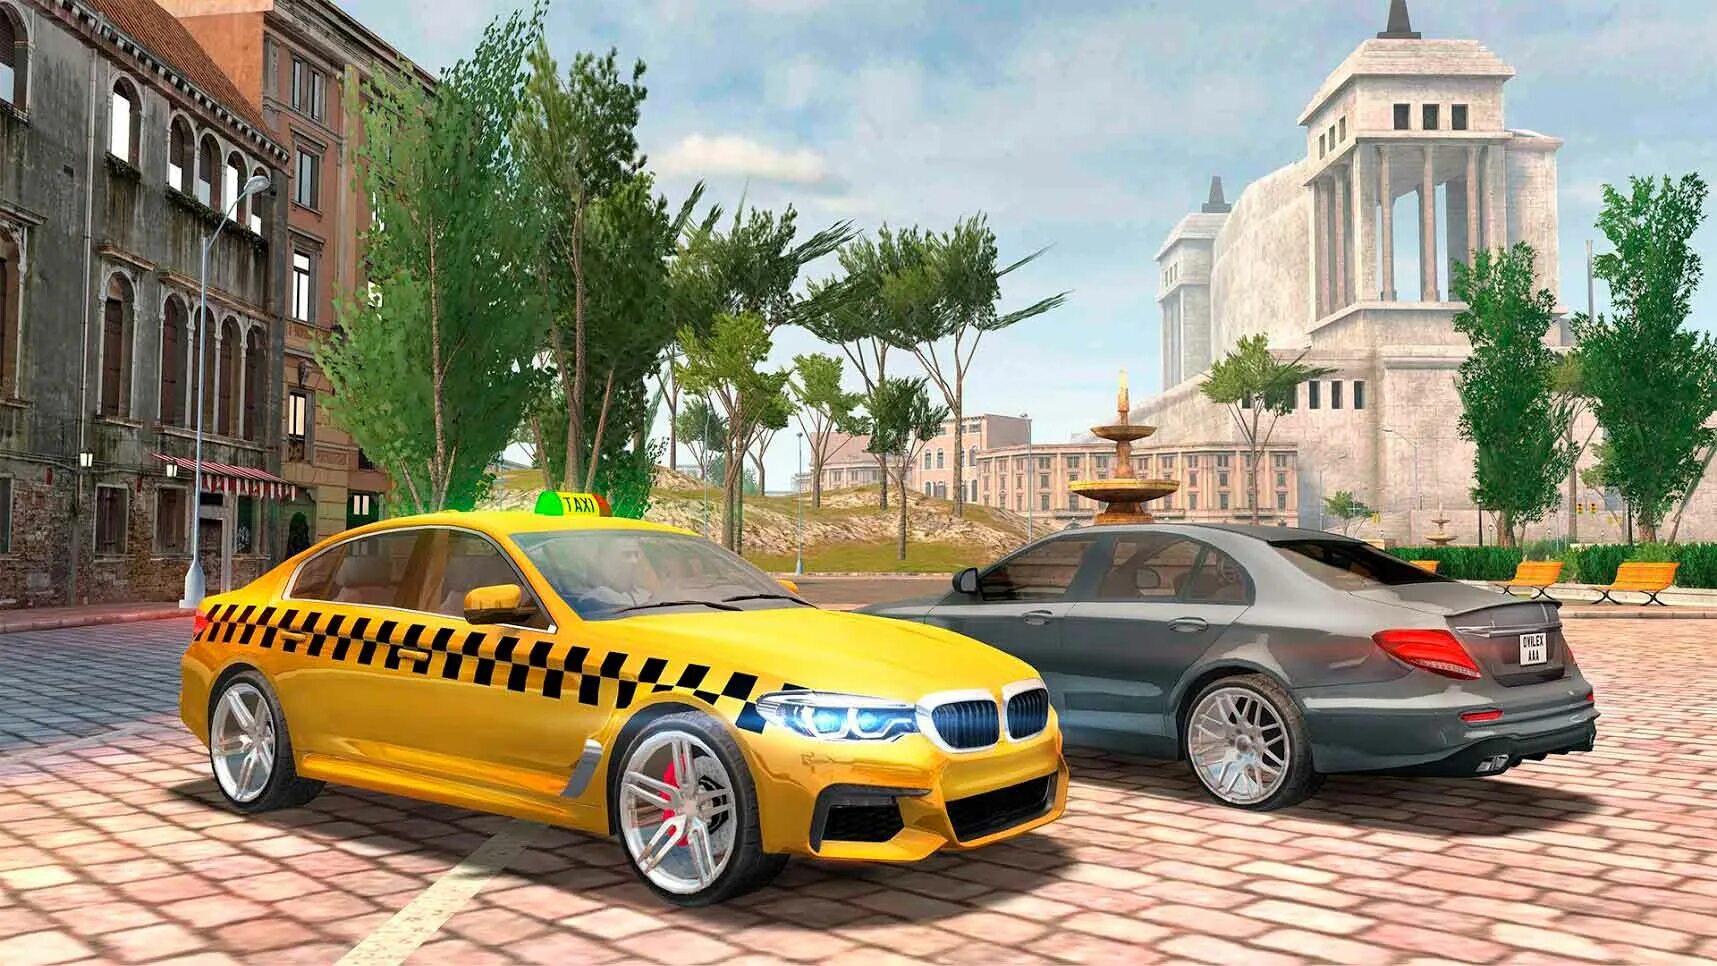 Taxi SIM 2022 Evolution. Taxi Simulator 2020. Симулятор таксиста 2020. Андроид Taxi SIM 2020.